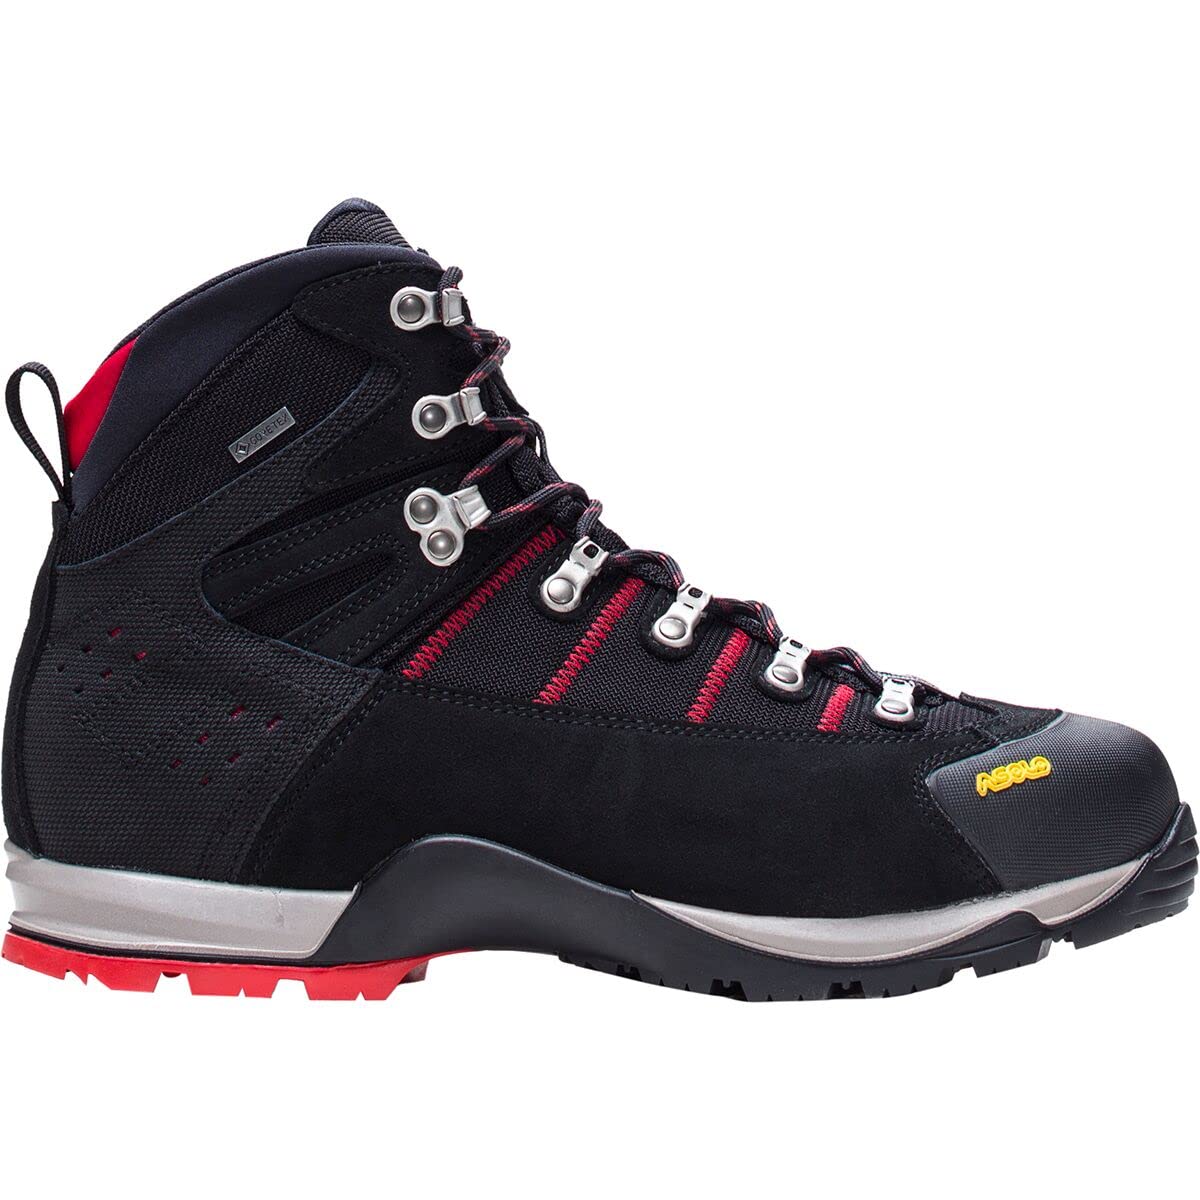 Asolo Men's Fugitive GTX Light Hiking and Trekking Boots